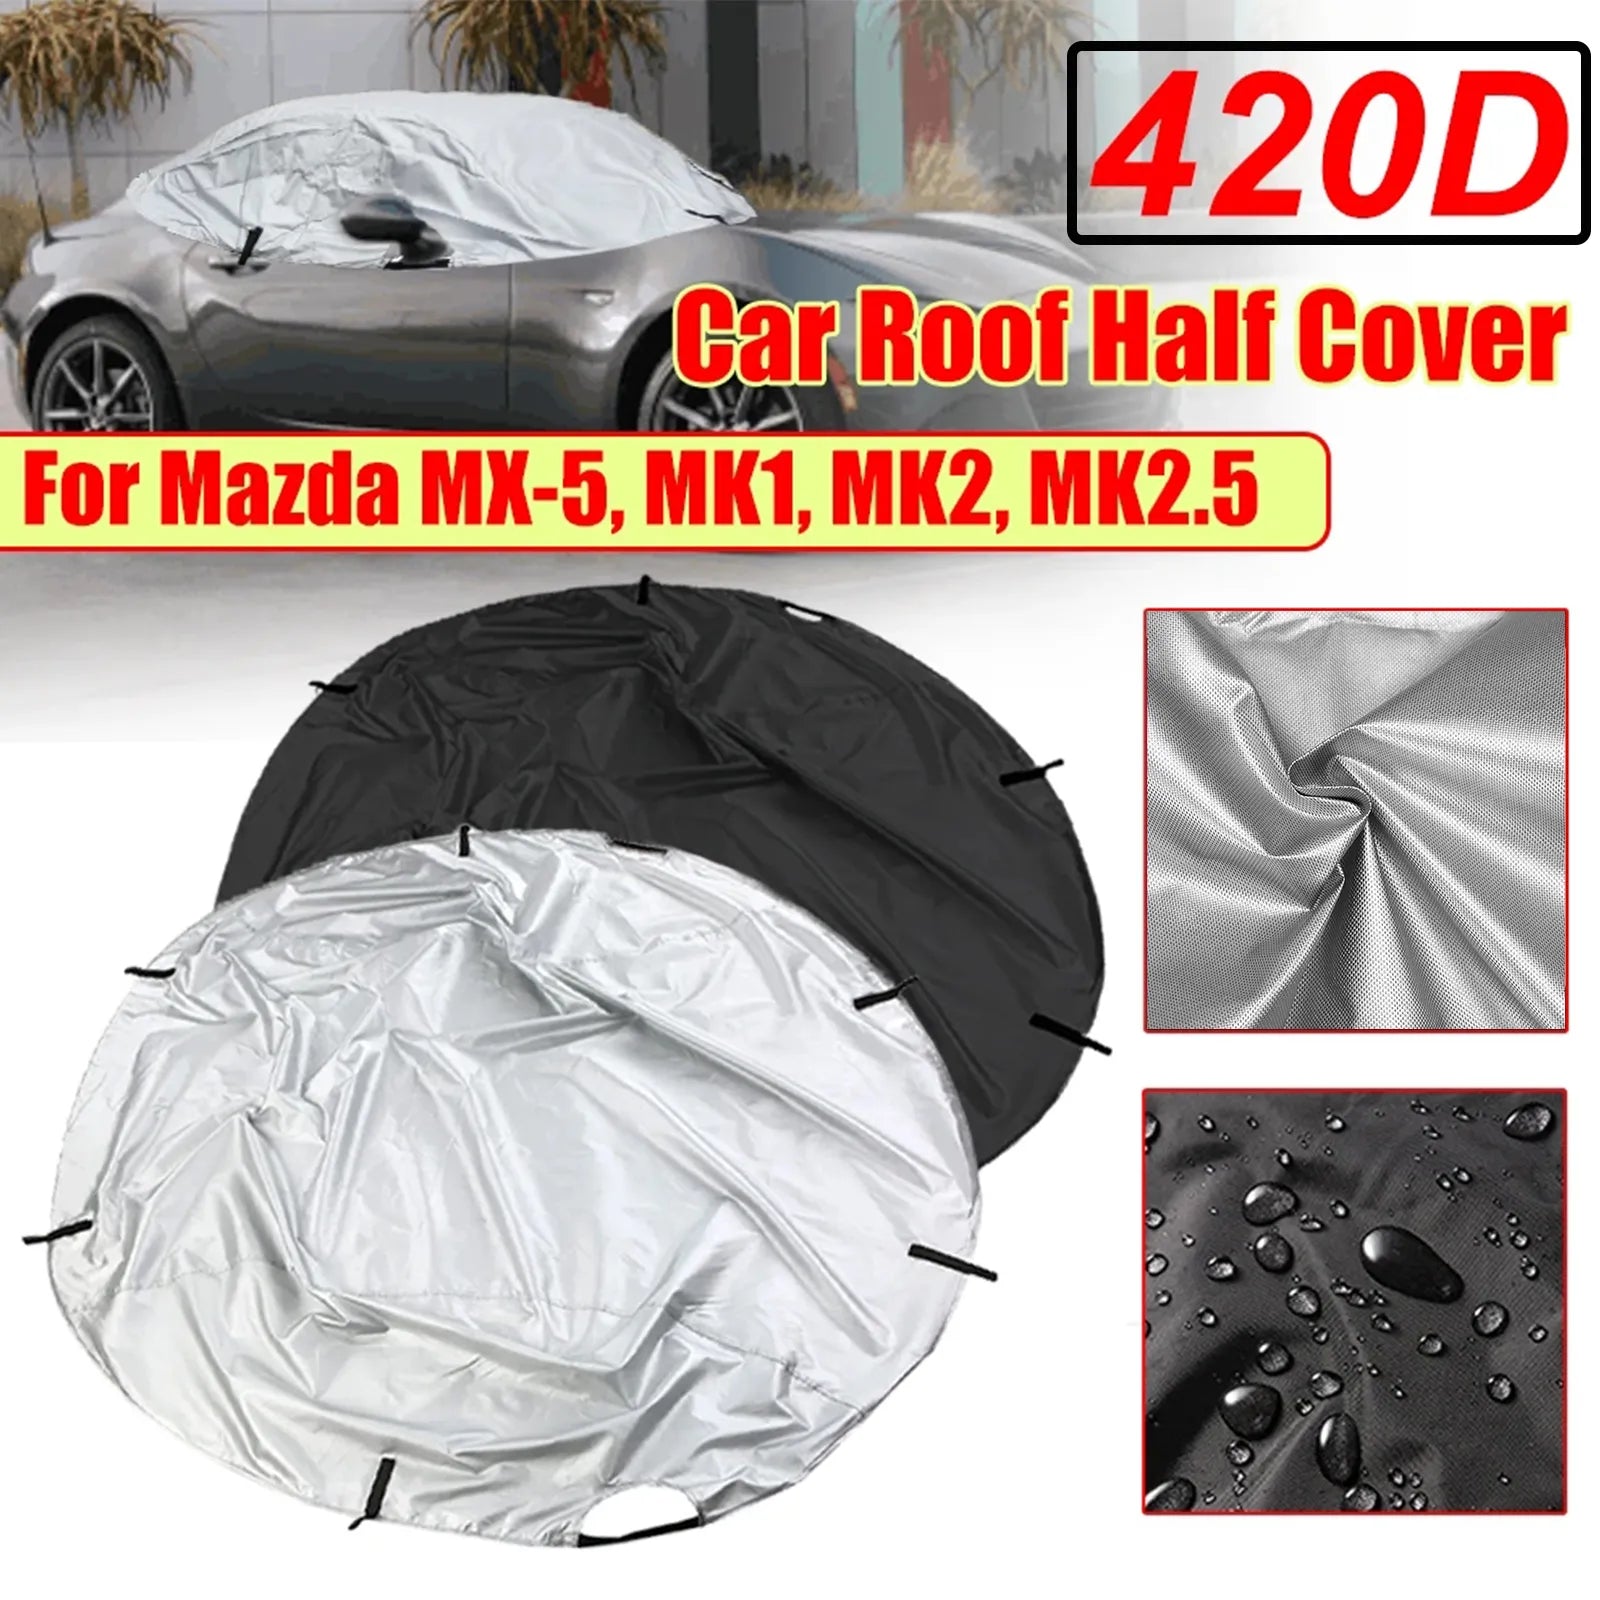 For Mazda MX-5 MK1 MK2 MK2.5 Soft Car Top Roof Cover Protect Half Cover 420D Waterproof Anti UV Sun Shade Dustproof Sliver Black